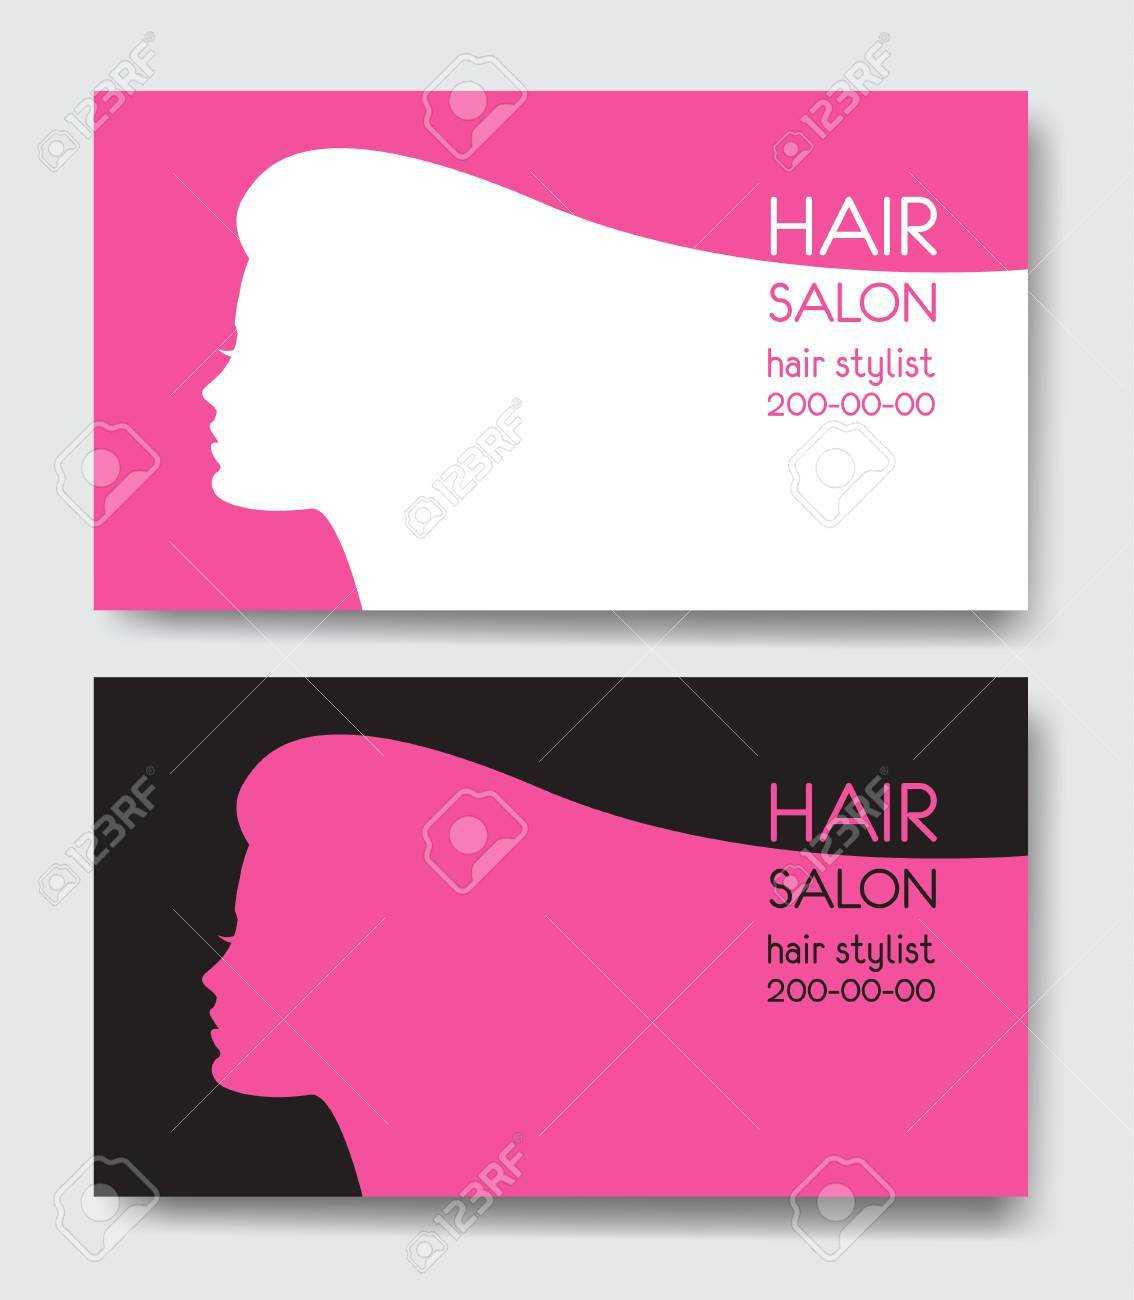 Hair Salon Business Card Templates. Pertaining To Hair Salon Business Card Template